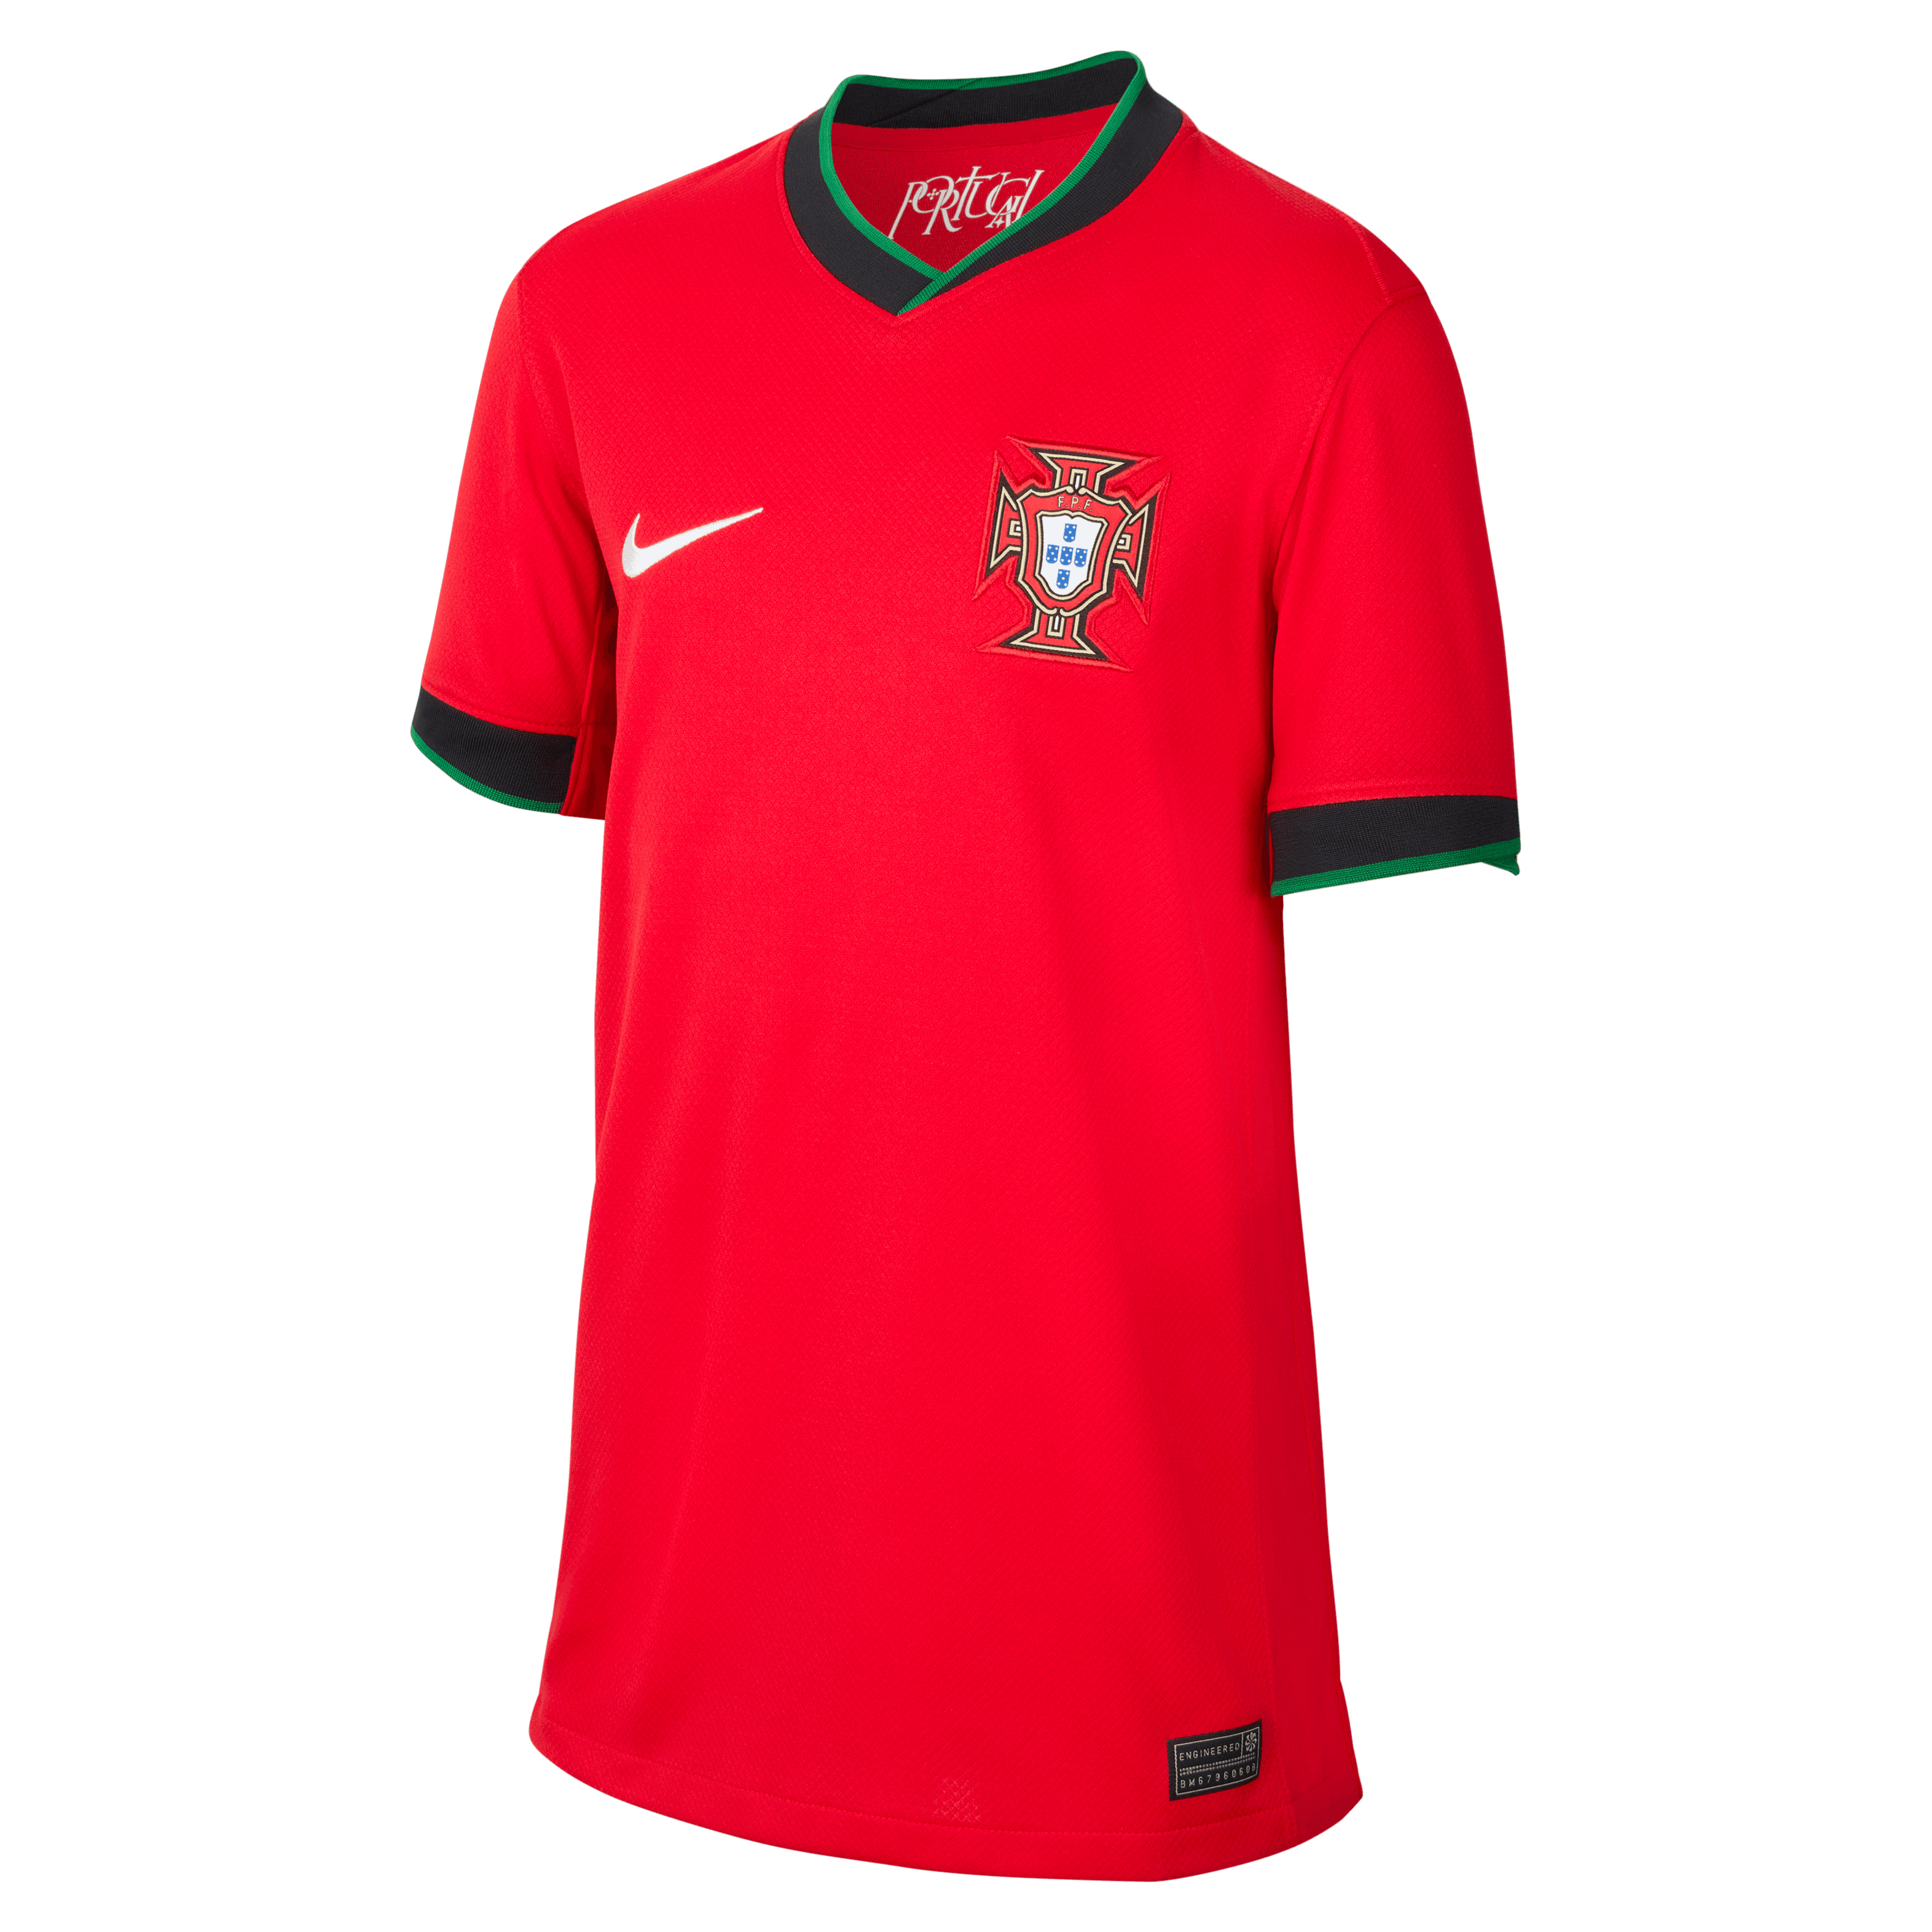 Nike Youth Portugal (Men's Team) Stadium Home Dri-FIT Soccer Replica Jersey 24/25